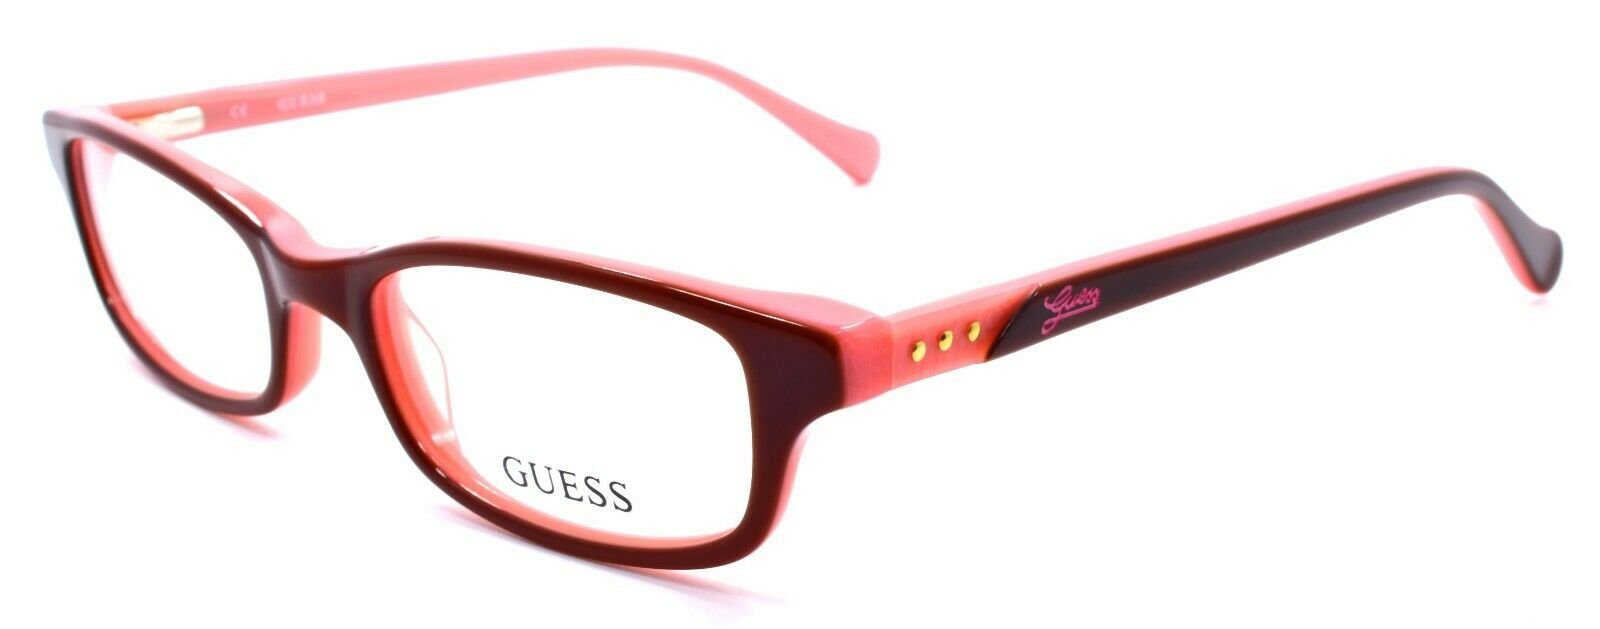 1-GUESS GU2292 048 Women's Eyeglasses Frames Petite 48-17-135 Brown / Pink-664689761937-IKSpecs